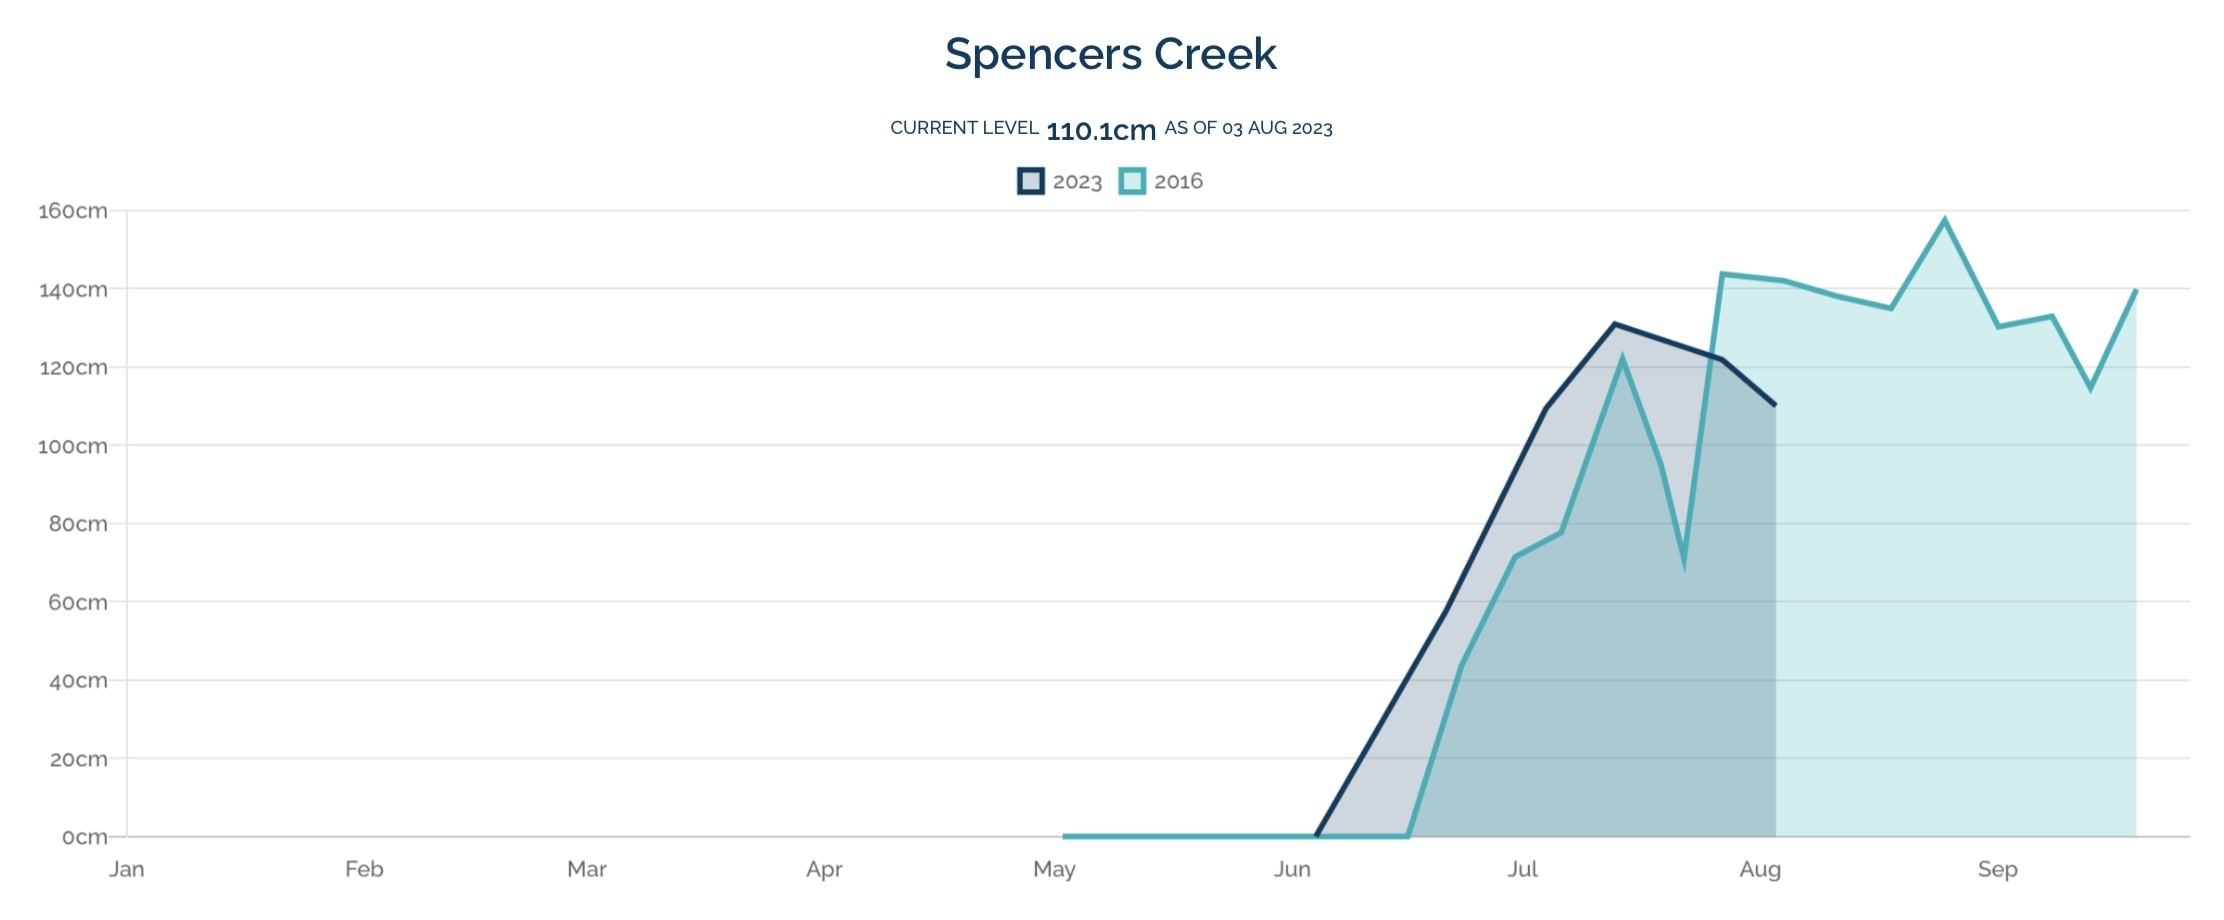 Spencer’s Creek